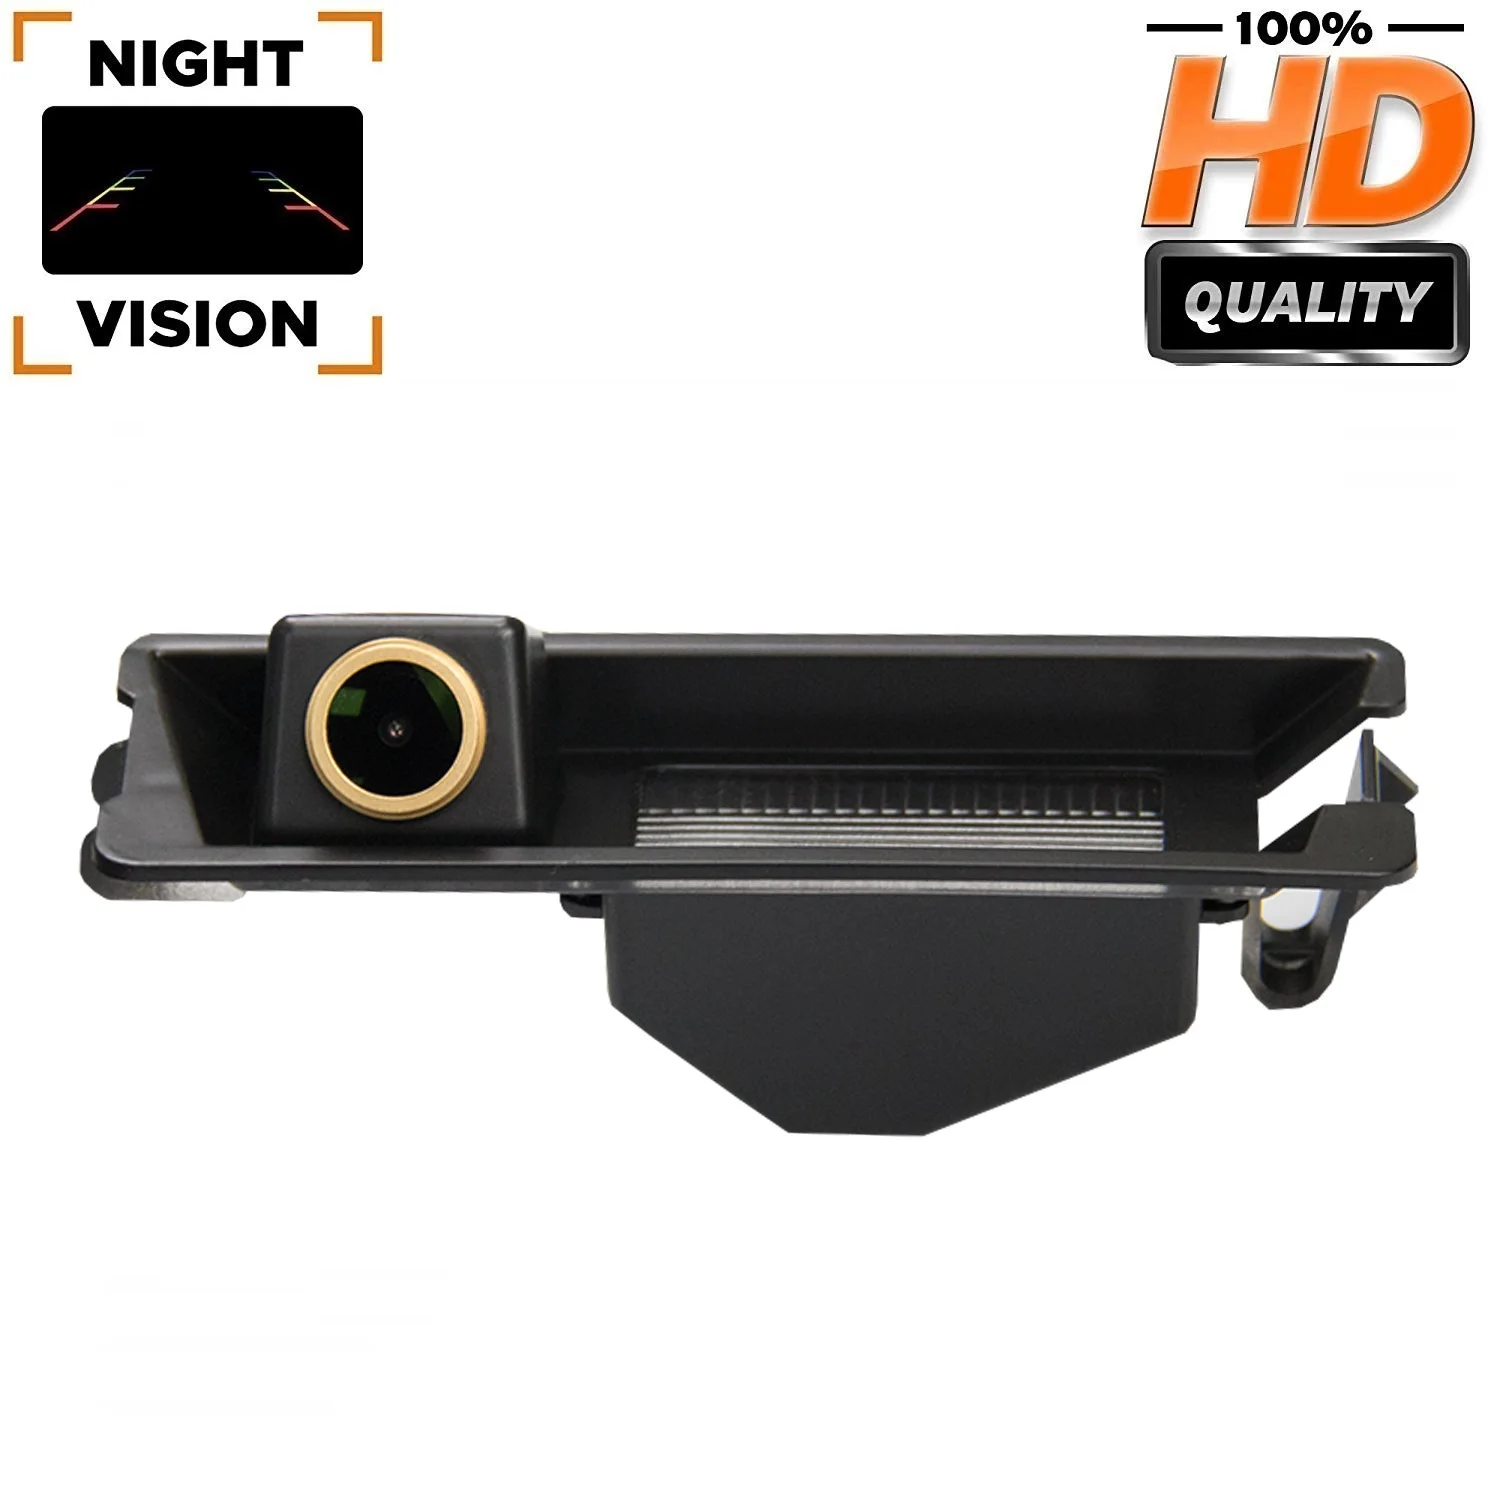 

HD720p Rear View Night Vison camera for March Renault Logan Sandero dacia Sander Stepway Pulse 2013-2014,Reversing Backup Camera